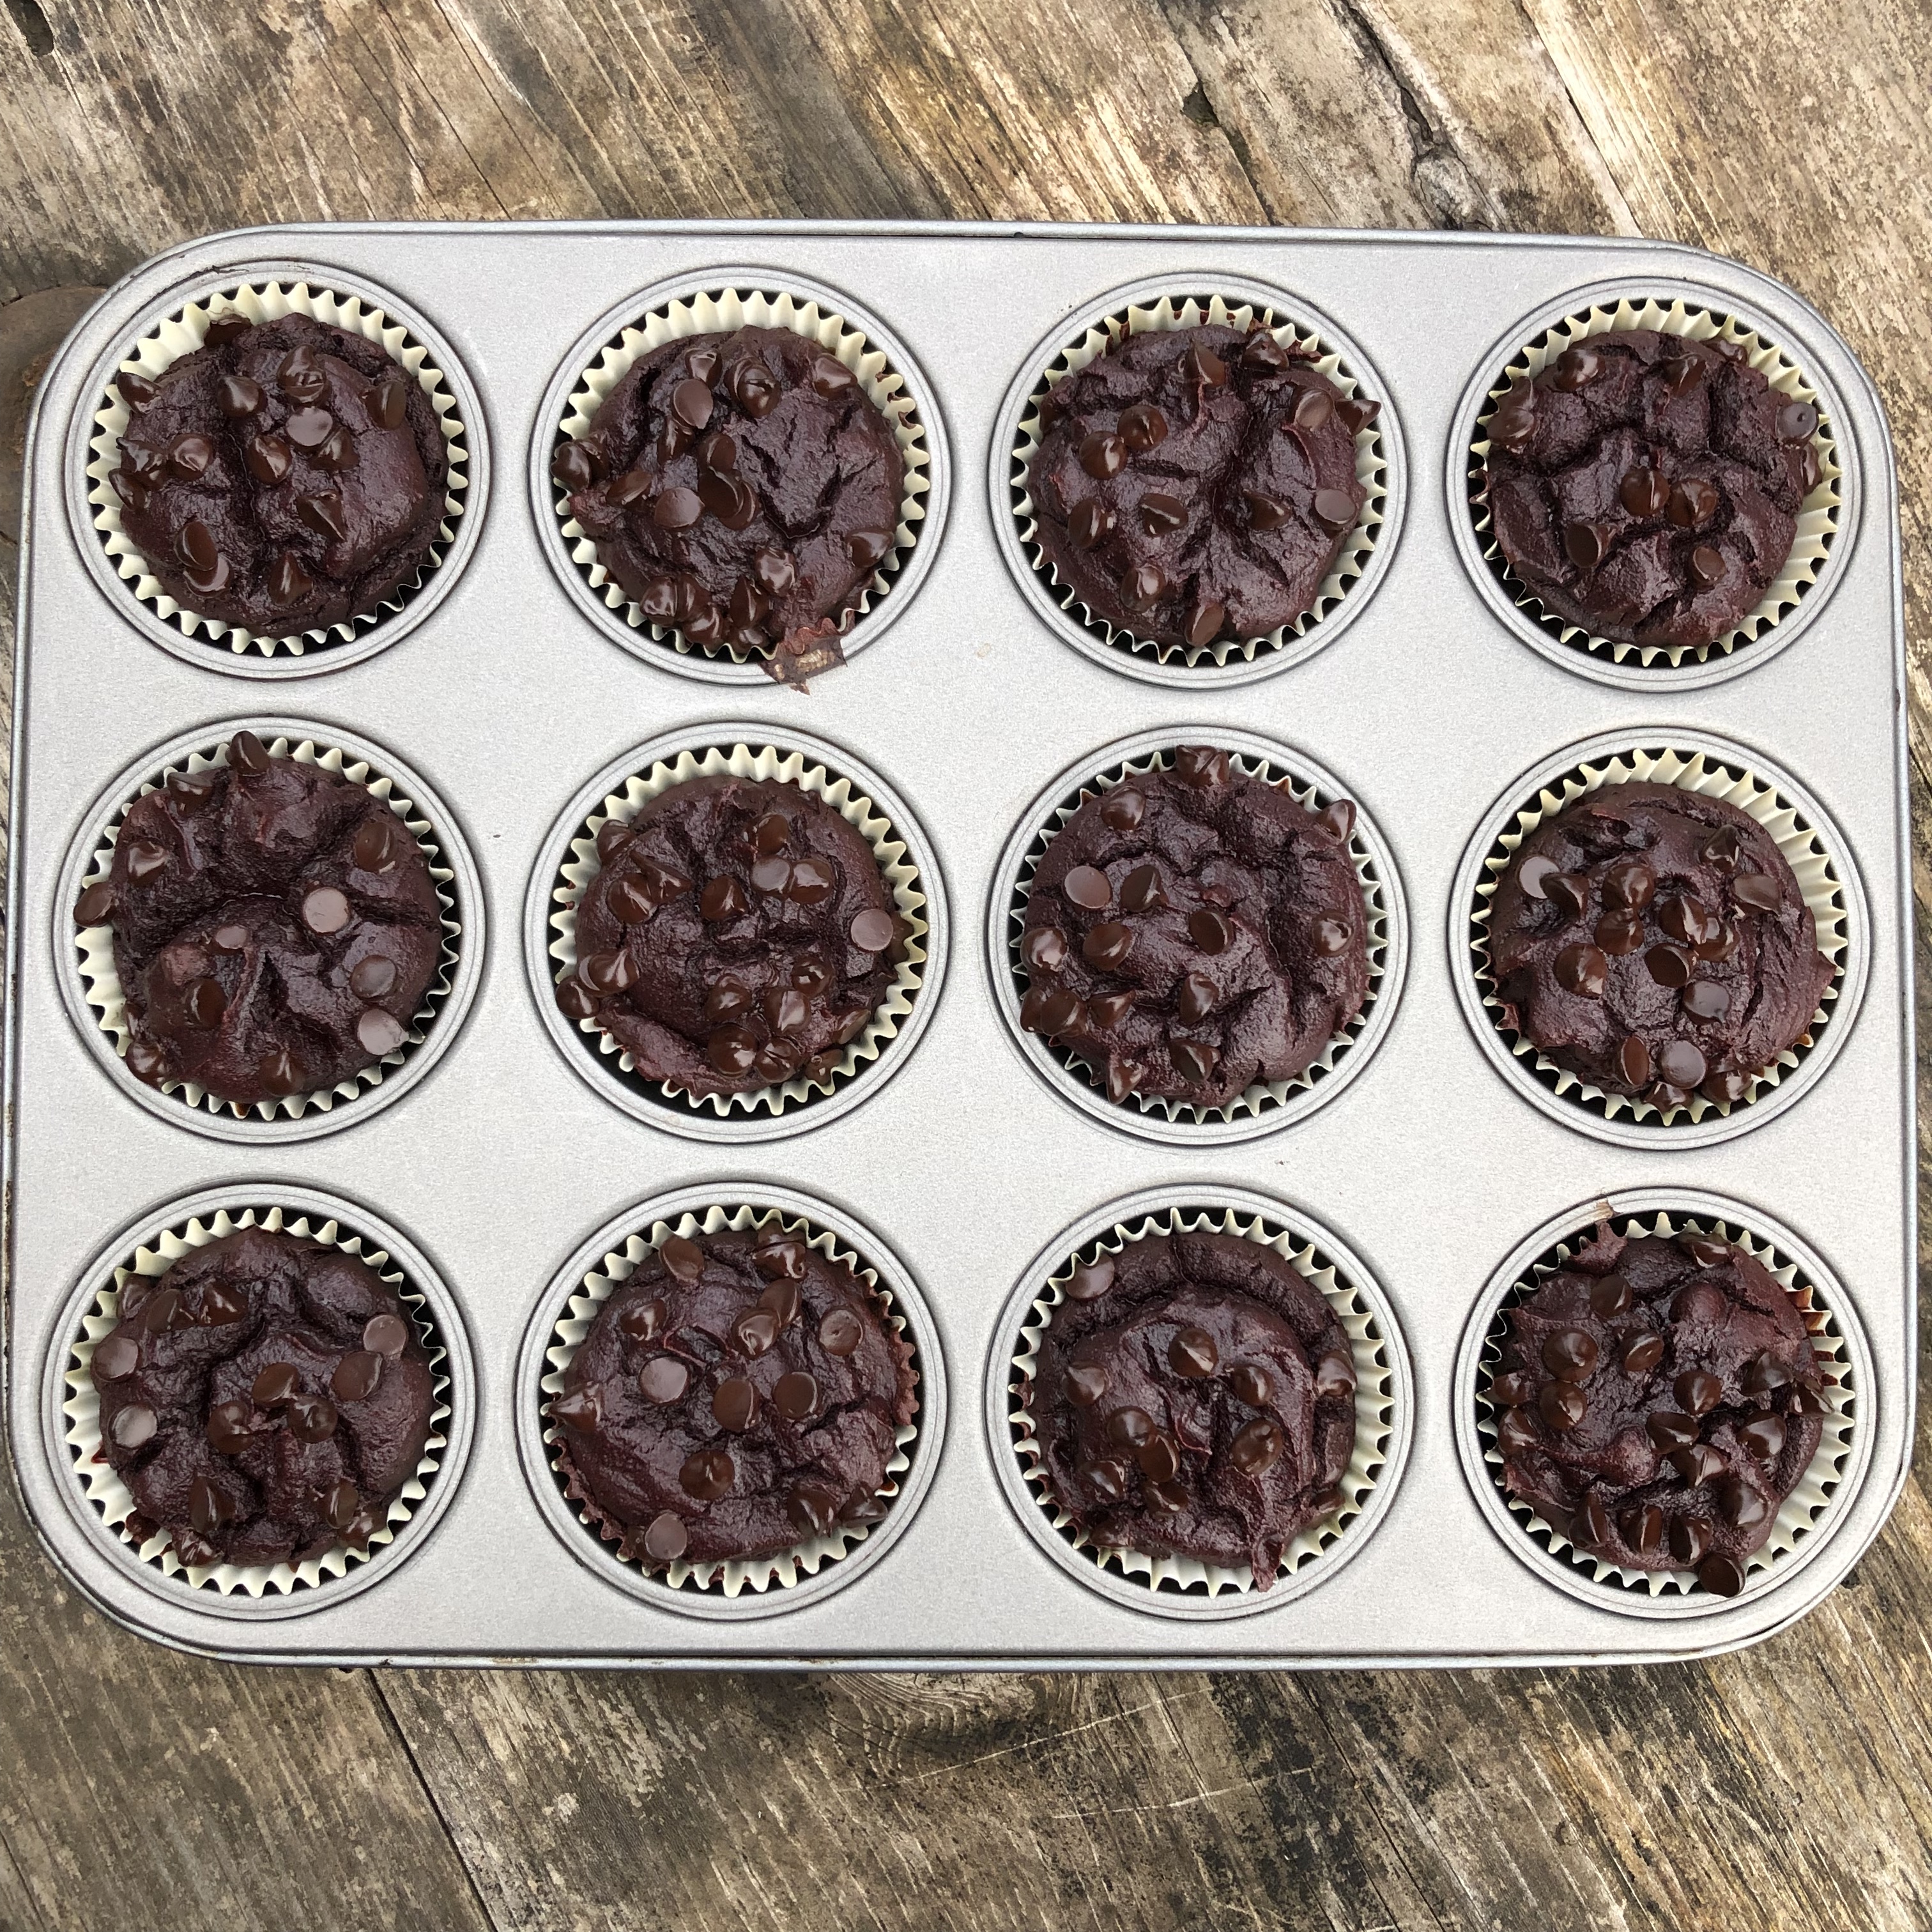 Chocolate Espresso Super Muffins, No Foolin’ (Paleo, No Sugar)